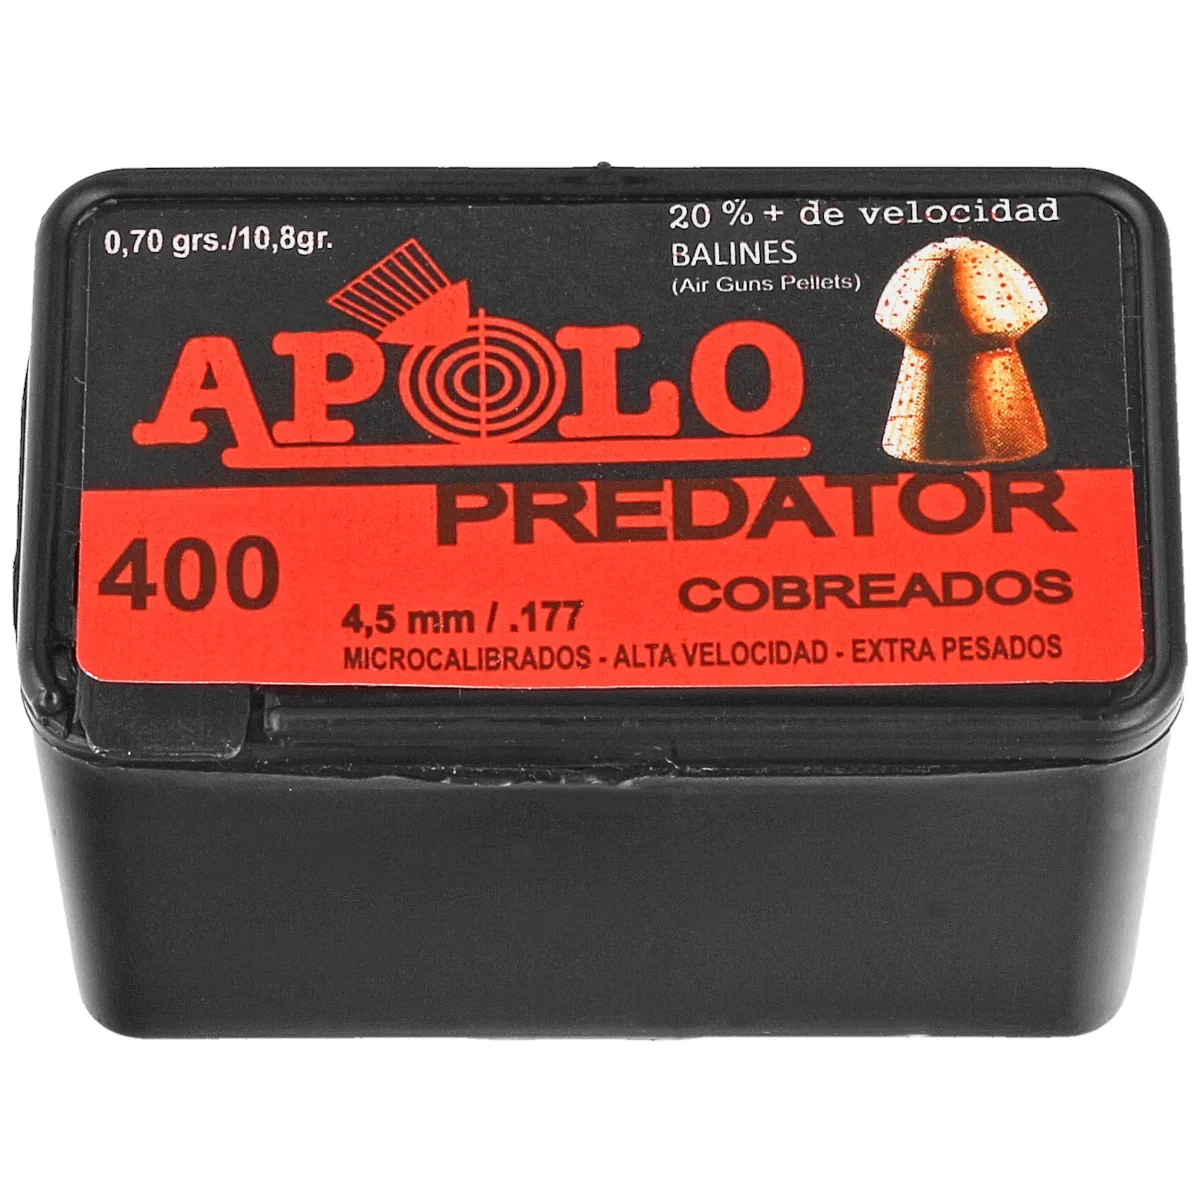 Apolo Predator Copper .177/4.5mm AirGun Pellets, 400 psc 0.70g/10.0gr (19950)